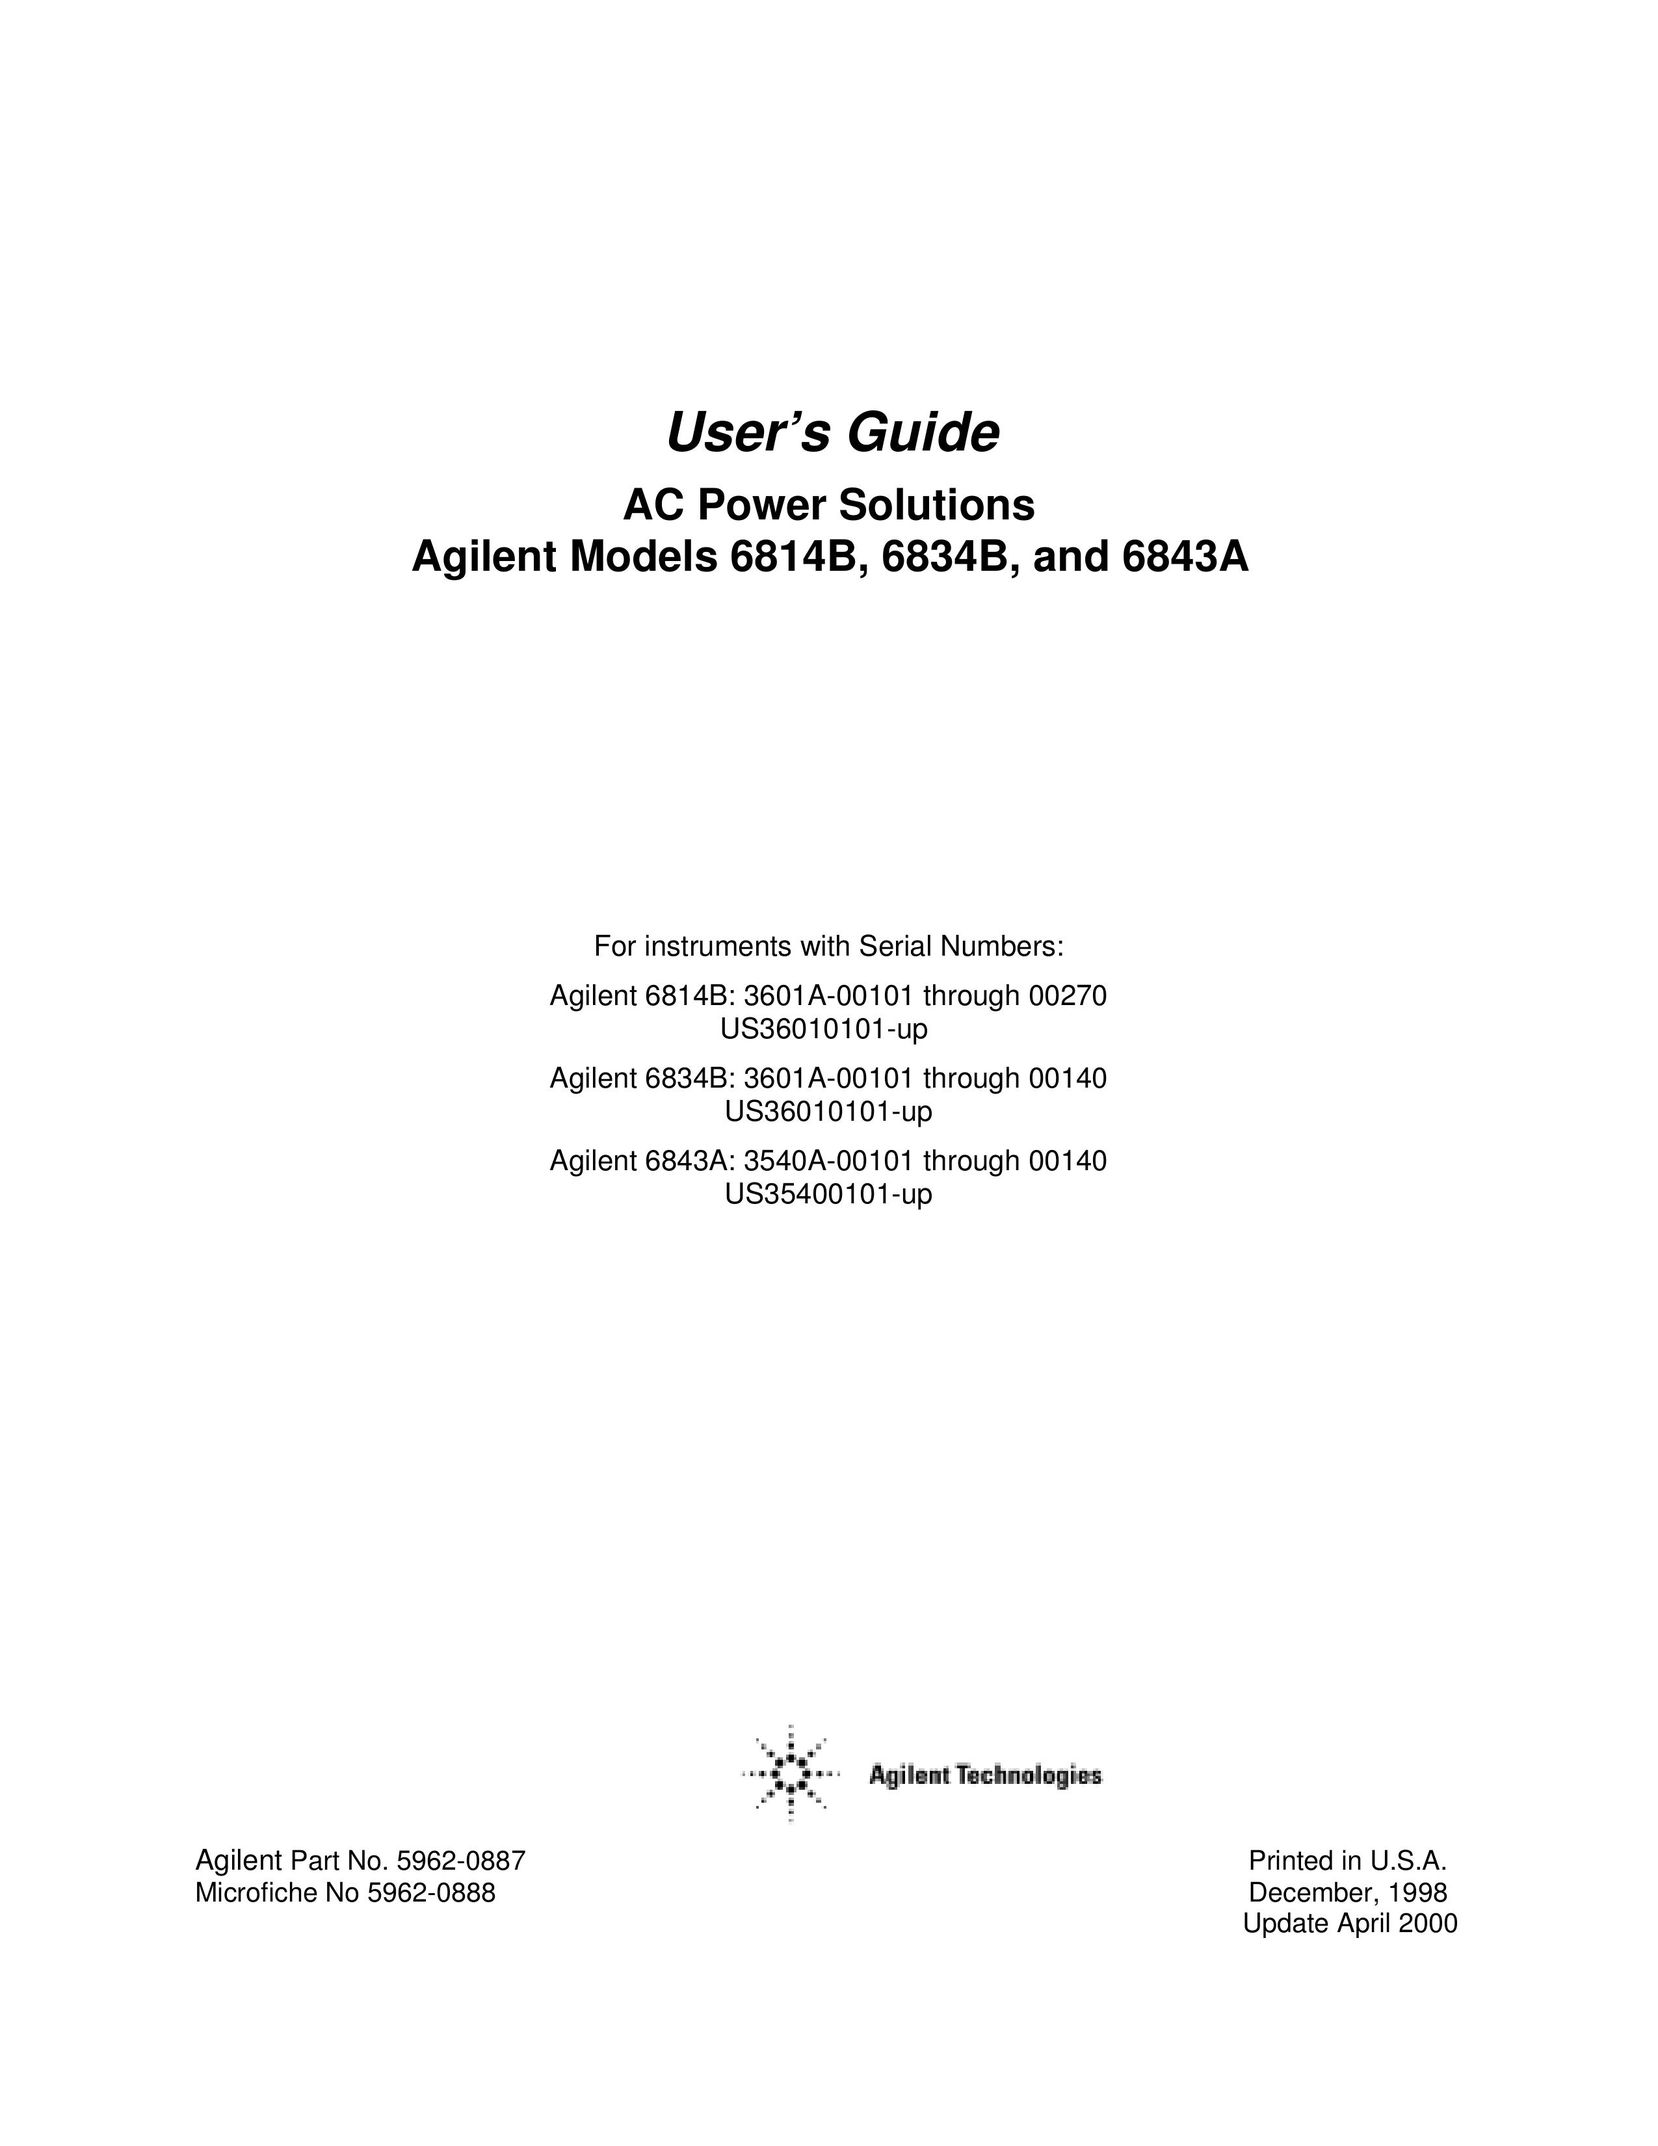 Agilent Technologies 6814B Air Conditioner User Manual